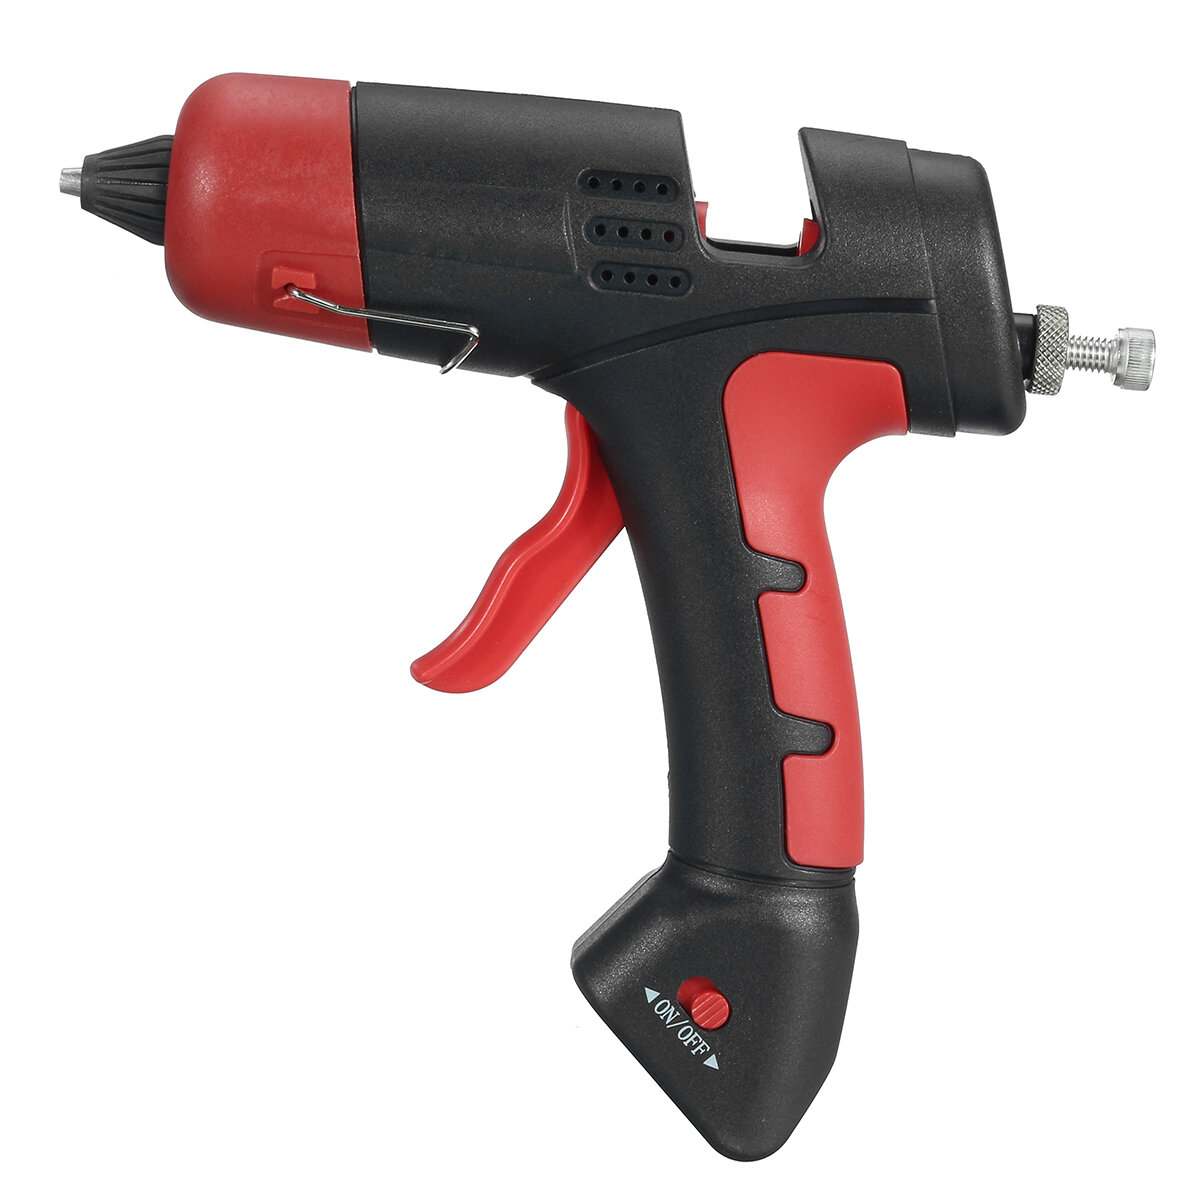 7mm Hot Melt Glue Gun Cordless Rechargeable Hot Glue Applicator Home Improvement Craft DIY Multifunctional Household Tool COD